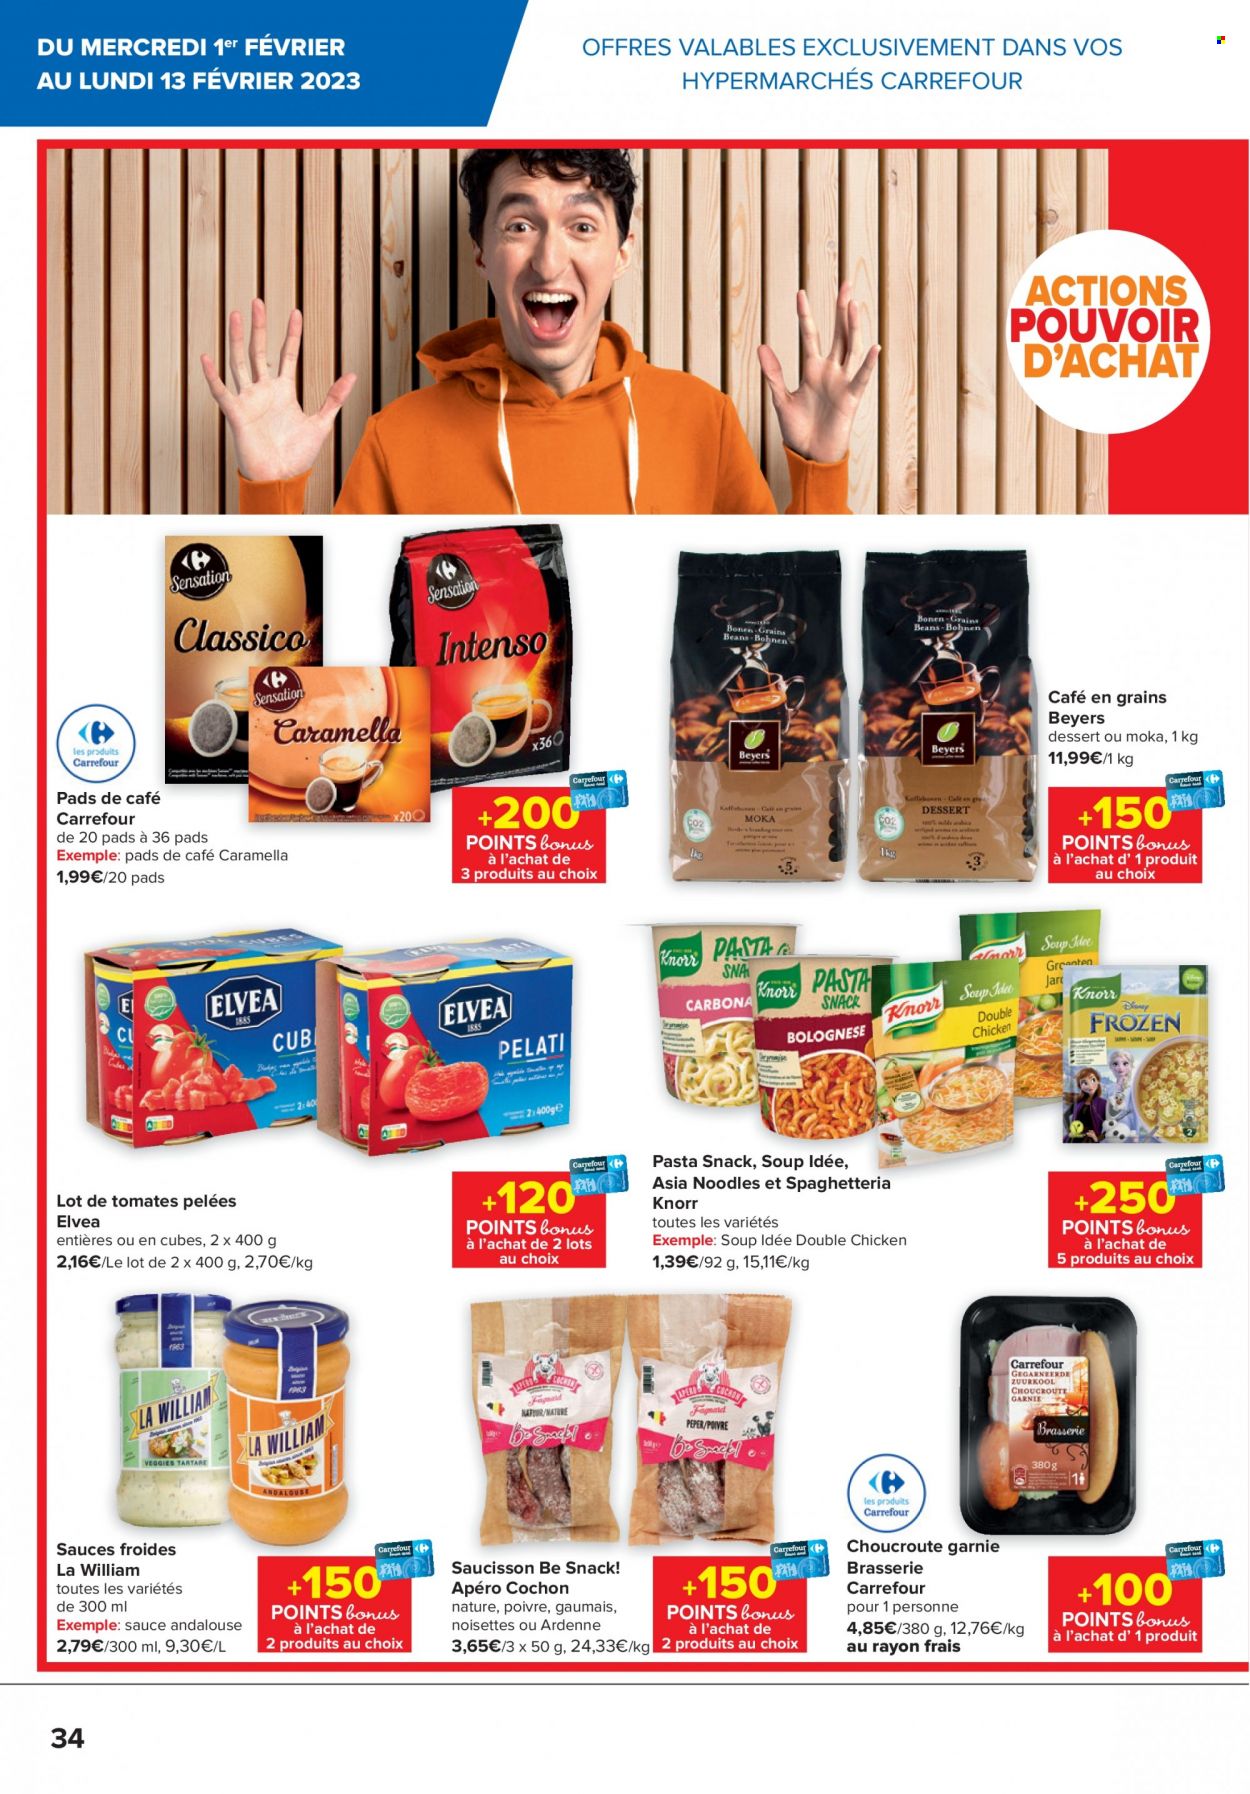 thumbnail - Carrefour hypermarkt-aanbieding - 01/02/2023 - 13/02/2023 -  producten in de aanbieding - Knorr, choucroute, pasta. Pagina 34.